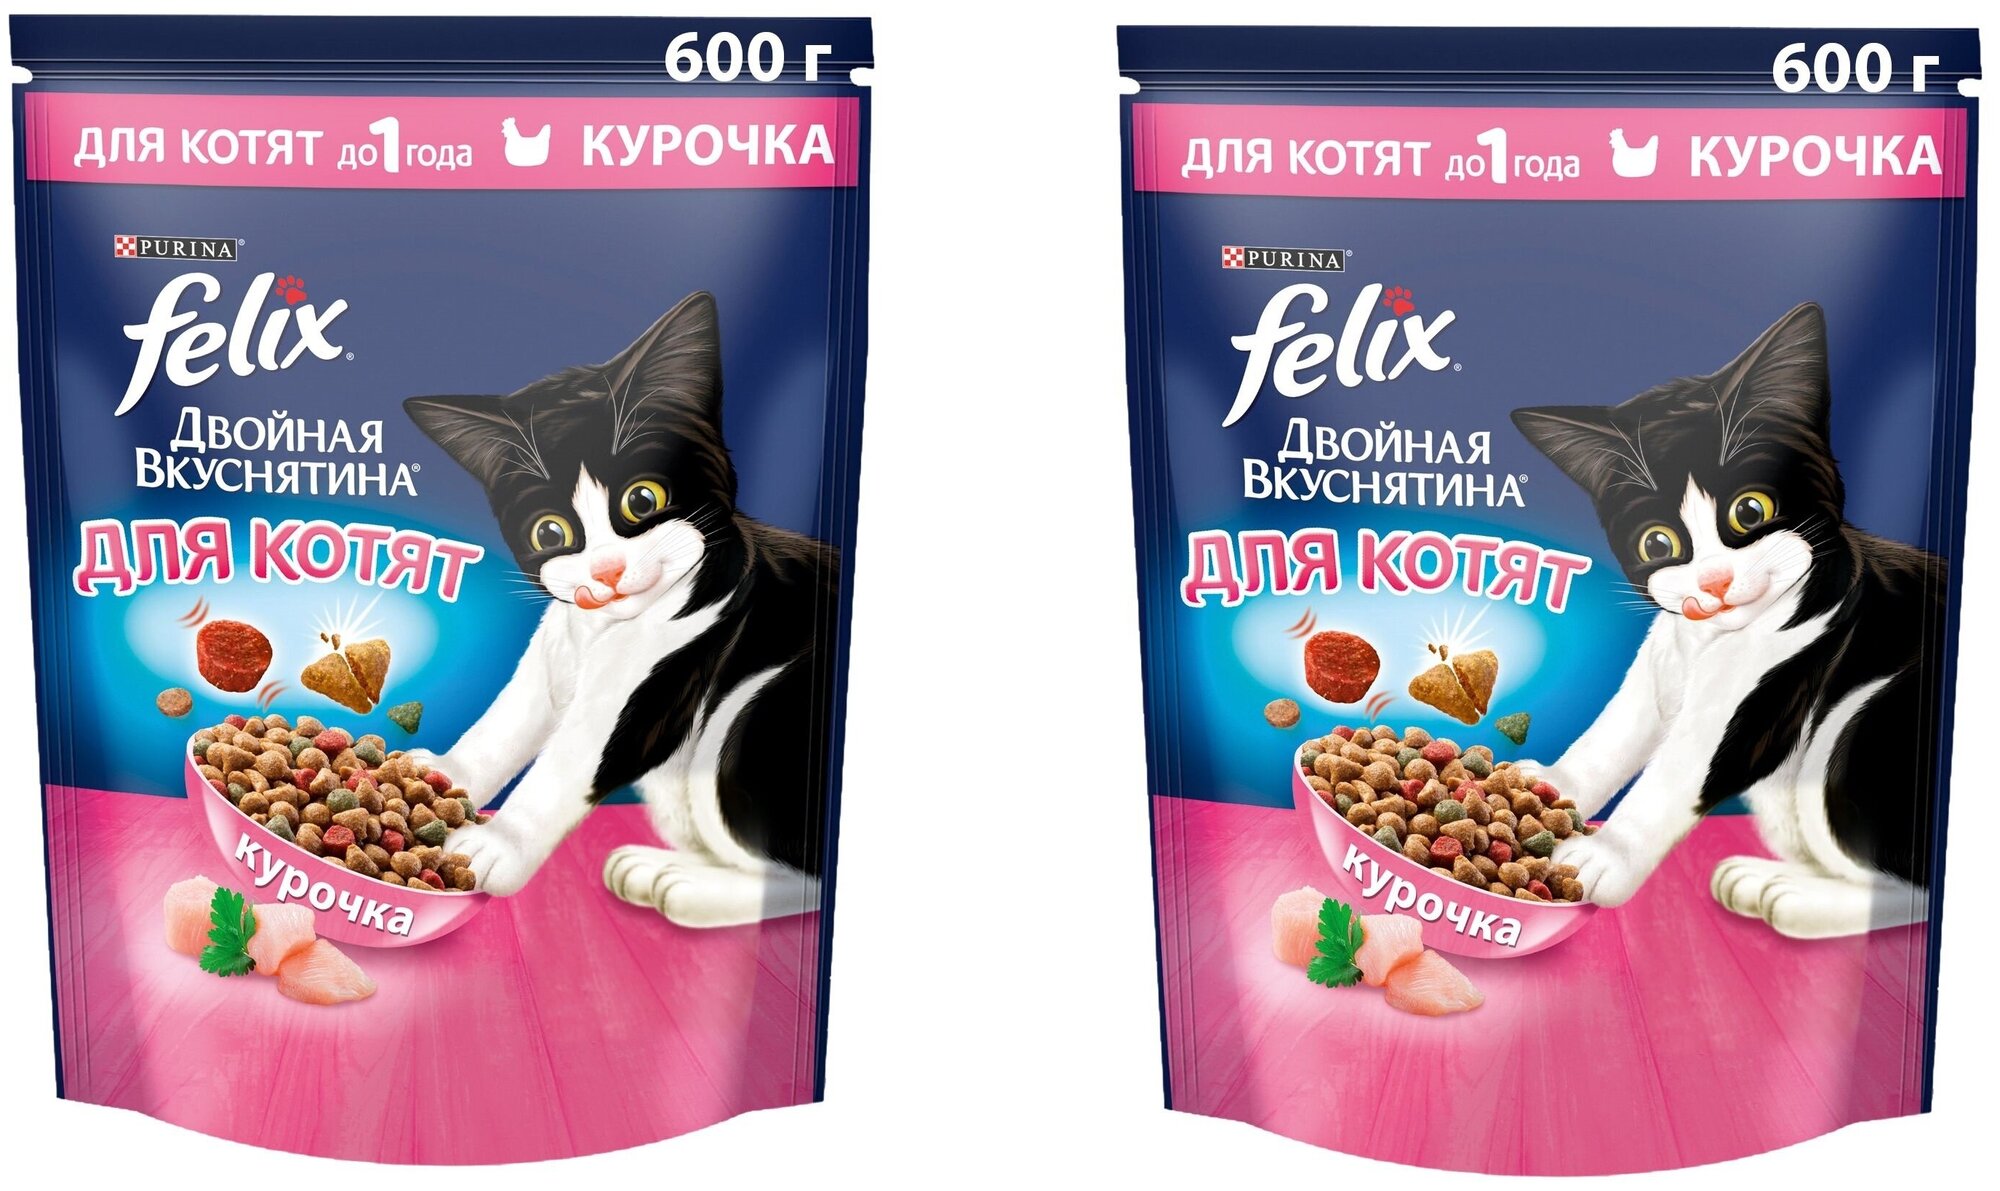 Сухой корм Felix Двойная Вкуснятина для котят, c курочкой, пакет, 600 г, 2 шт